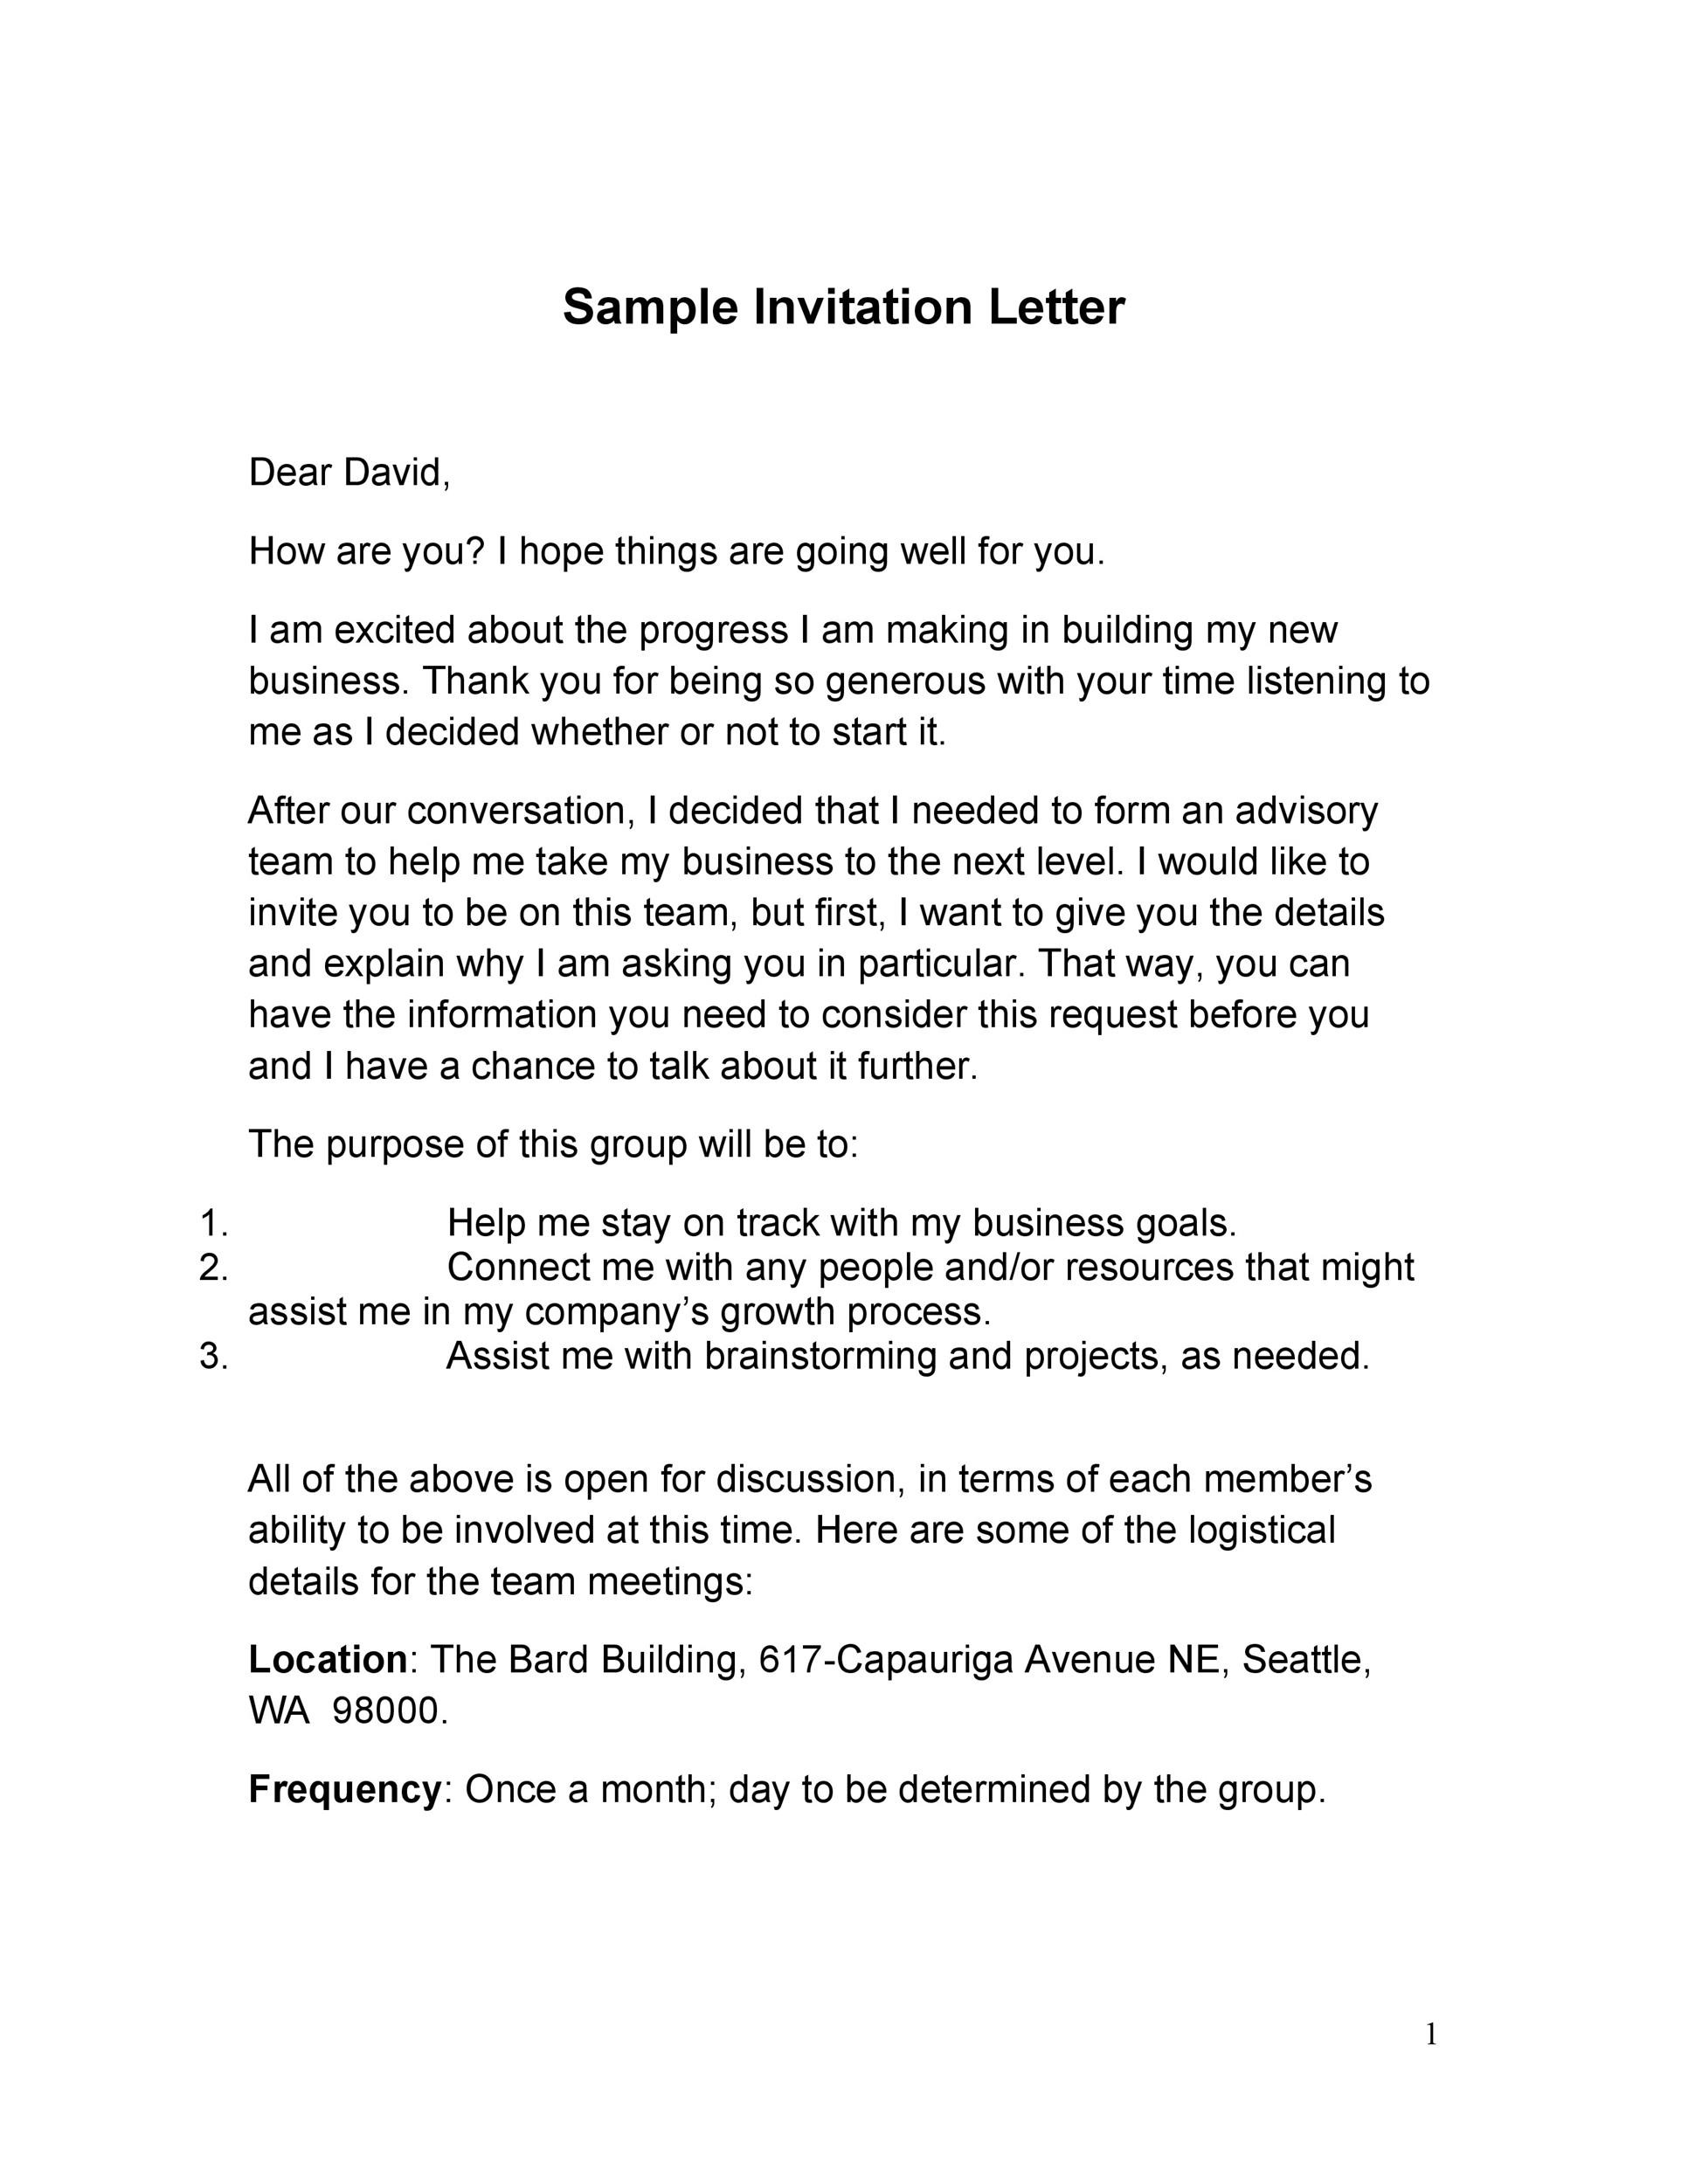 50 Best Invitation Letters (for Visa & General) ᐅ TemplateLab | Tea Band